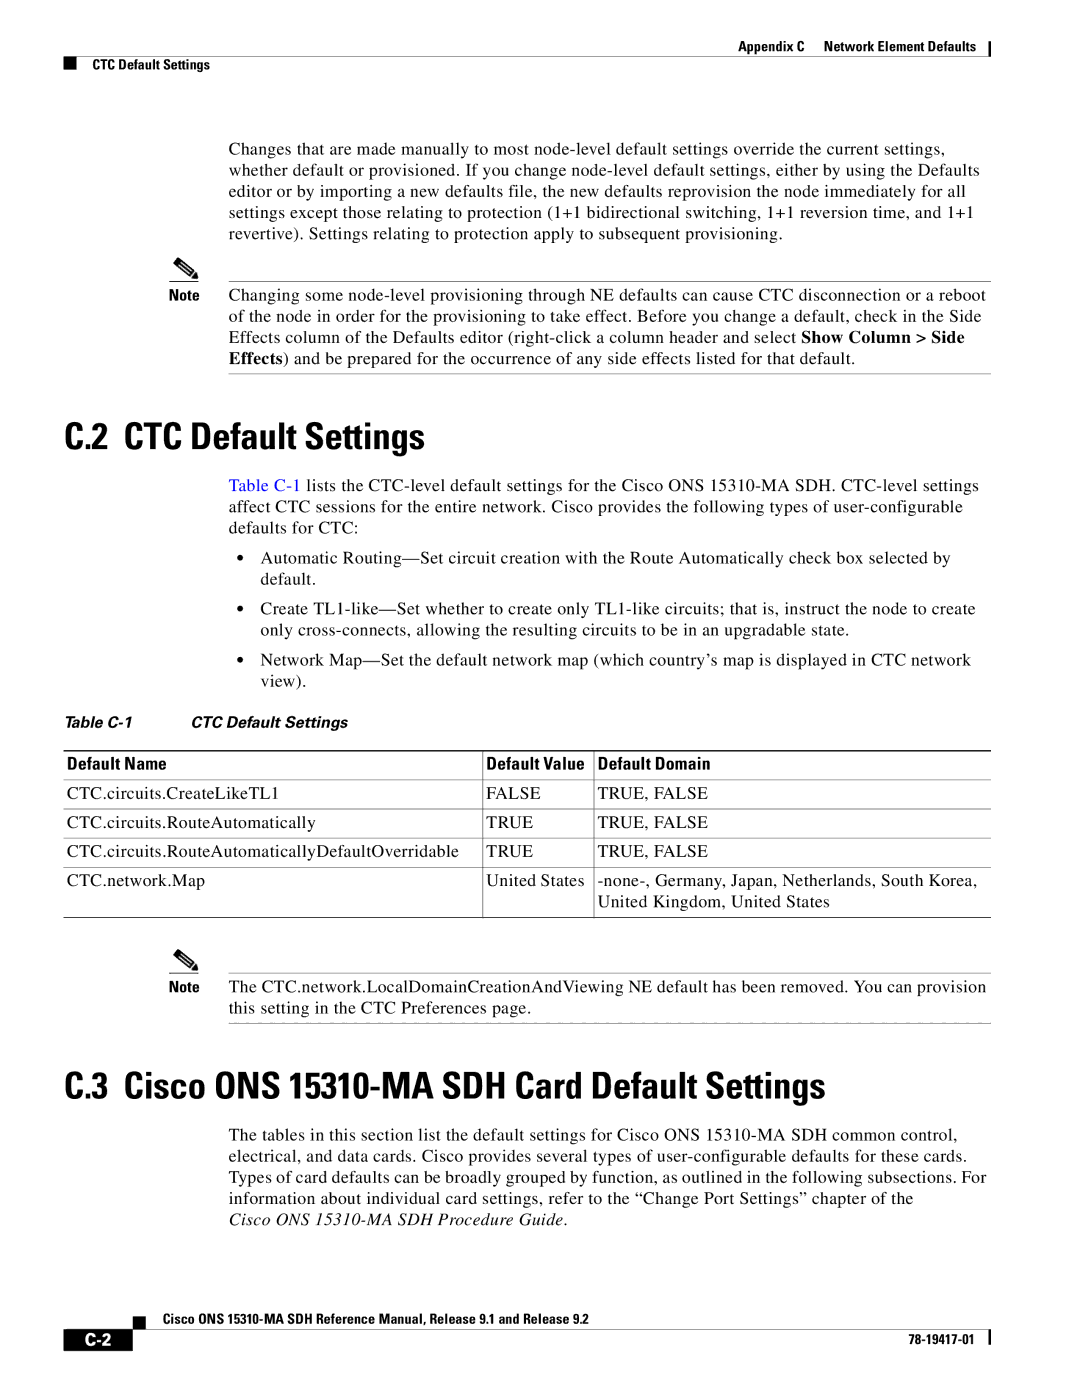 Cisco Systems manual CTC Default Settings, Cisco ONS 15310-MA SDH Card Default Settings, Default Name, Default Domain 